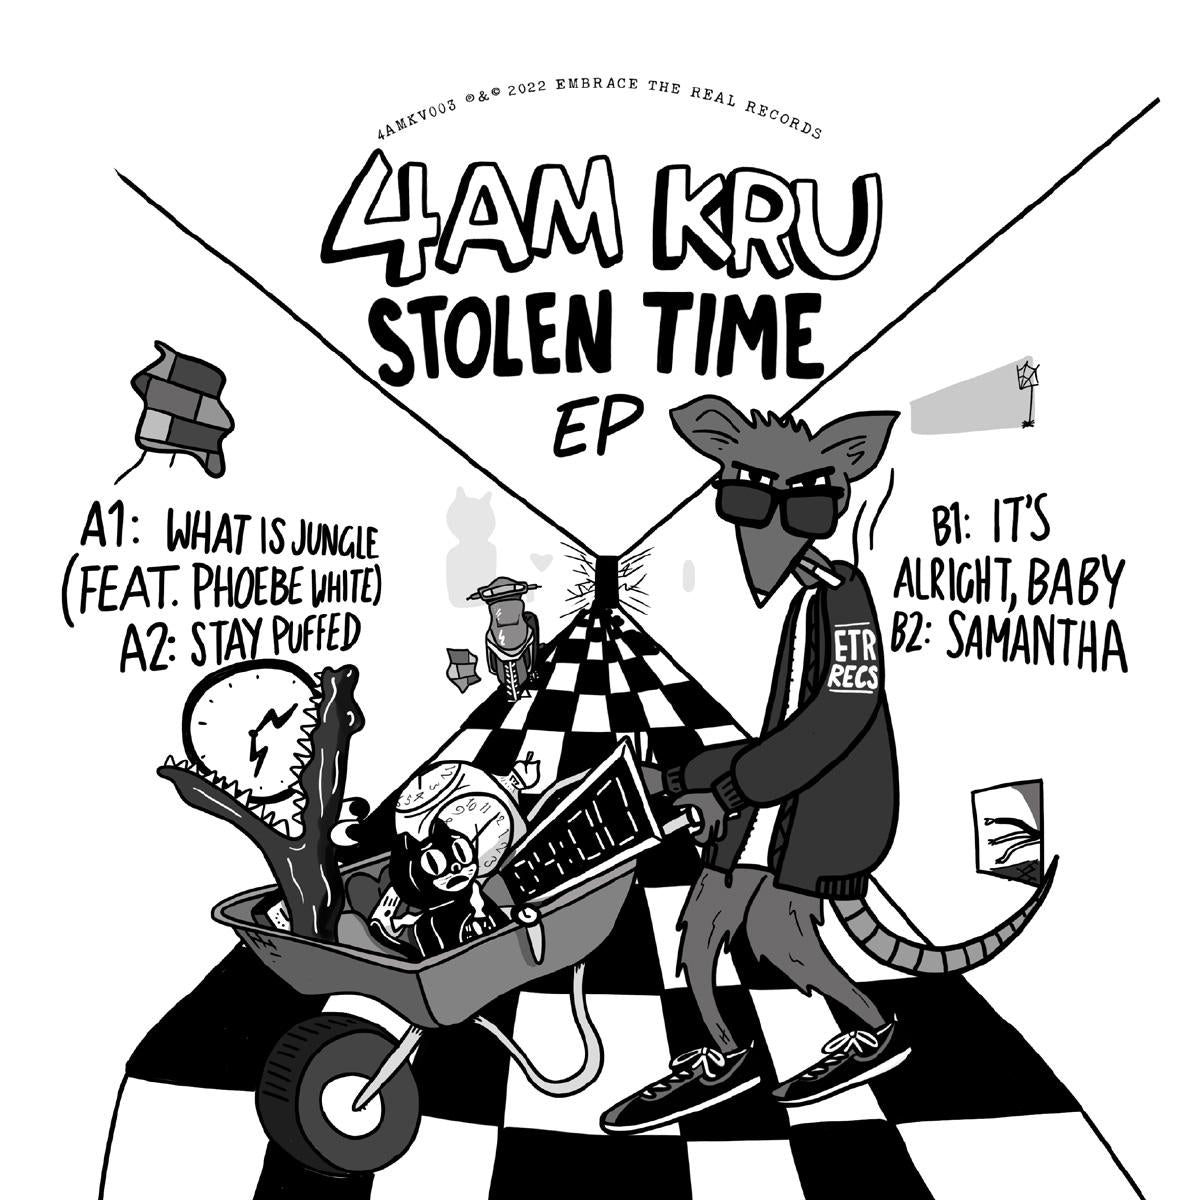 4AM KRU 'STOLEN TIME EP' 12" (REPRESS)